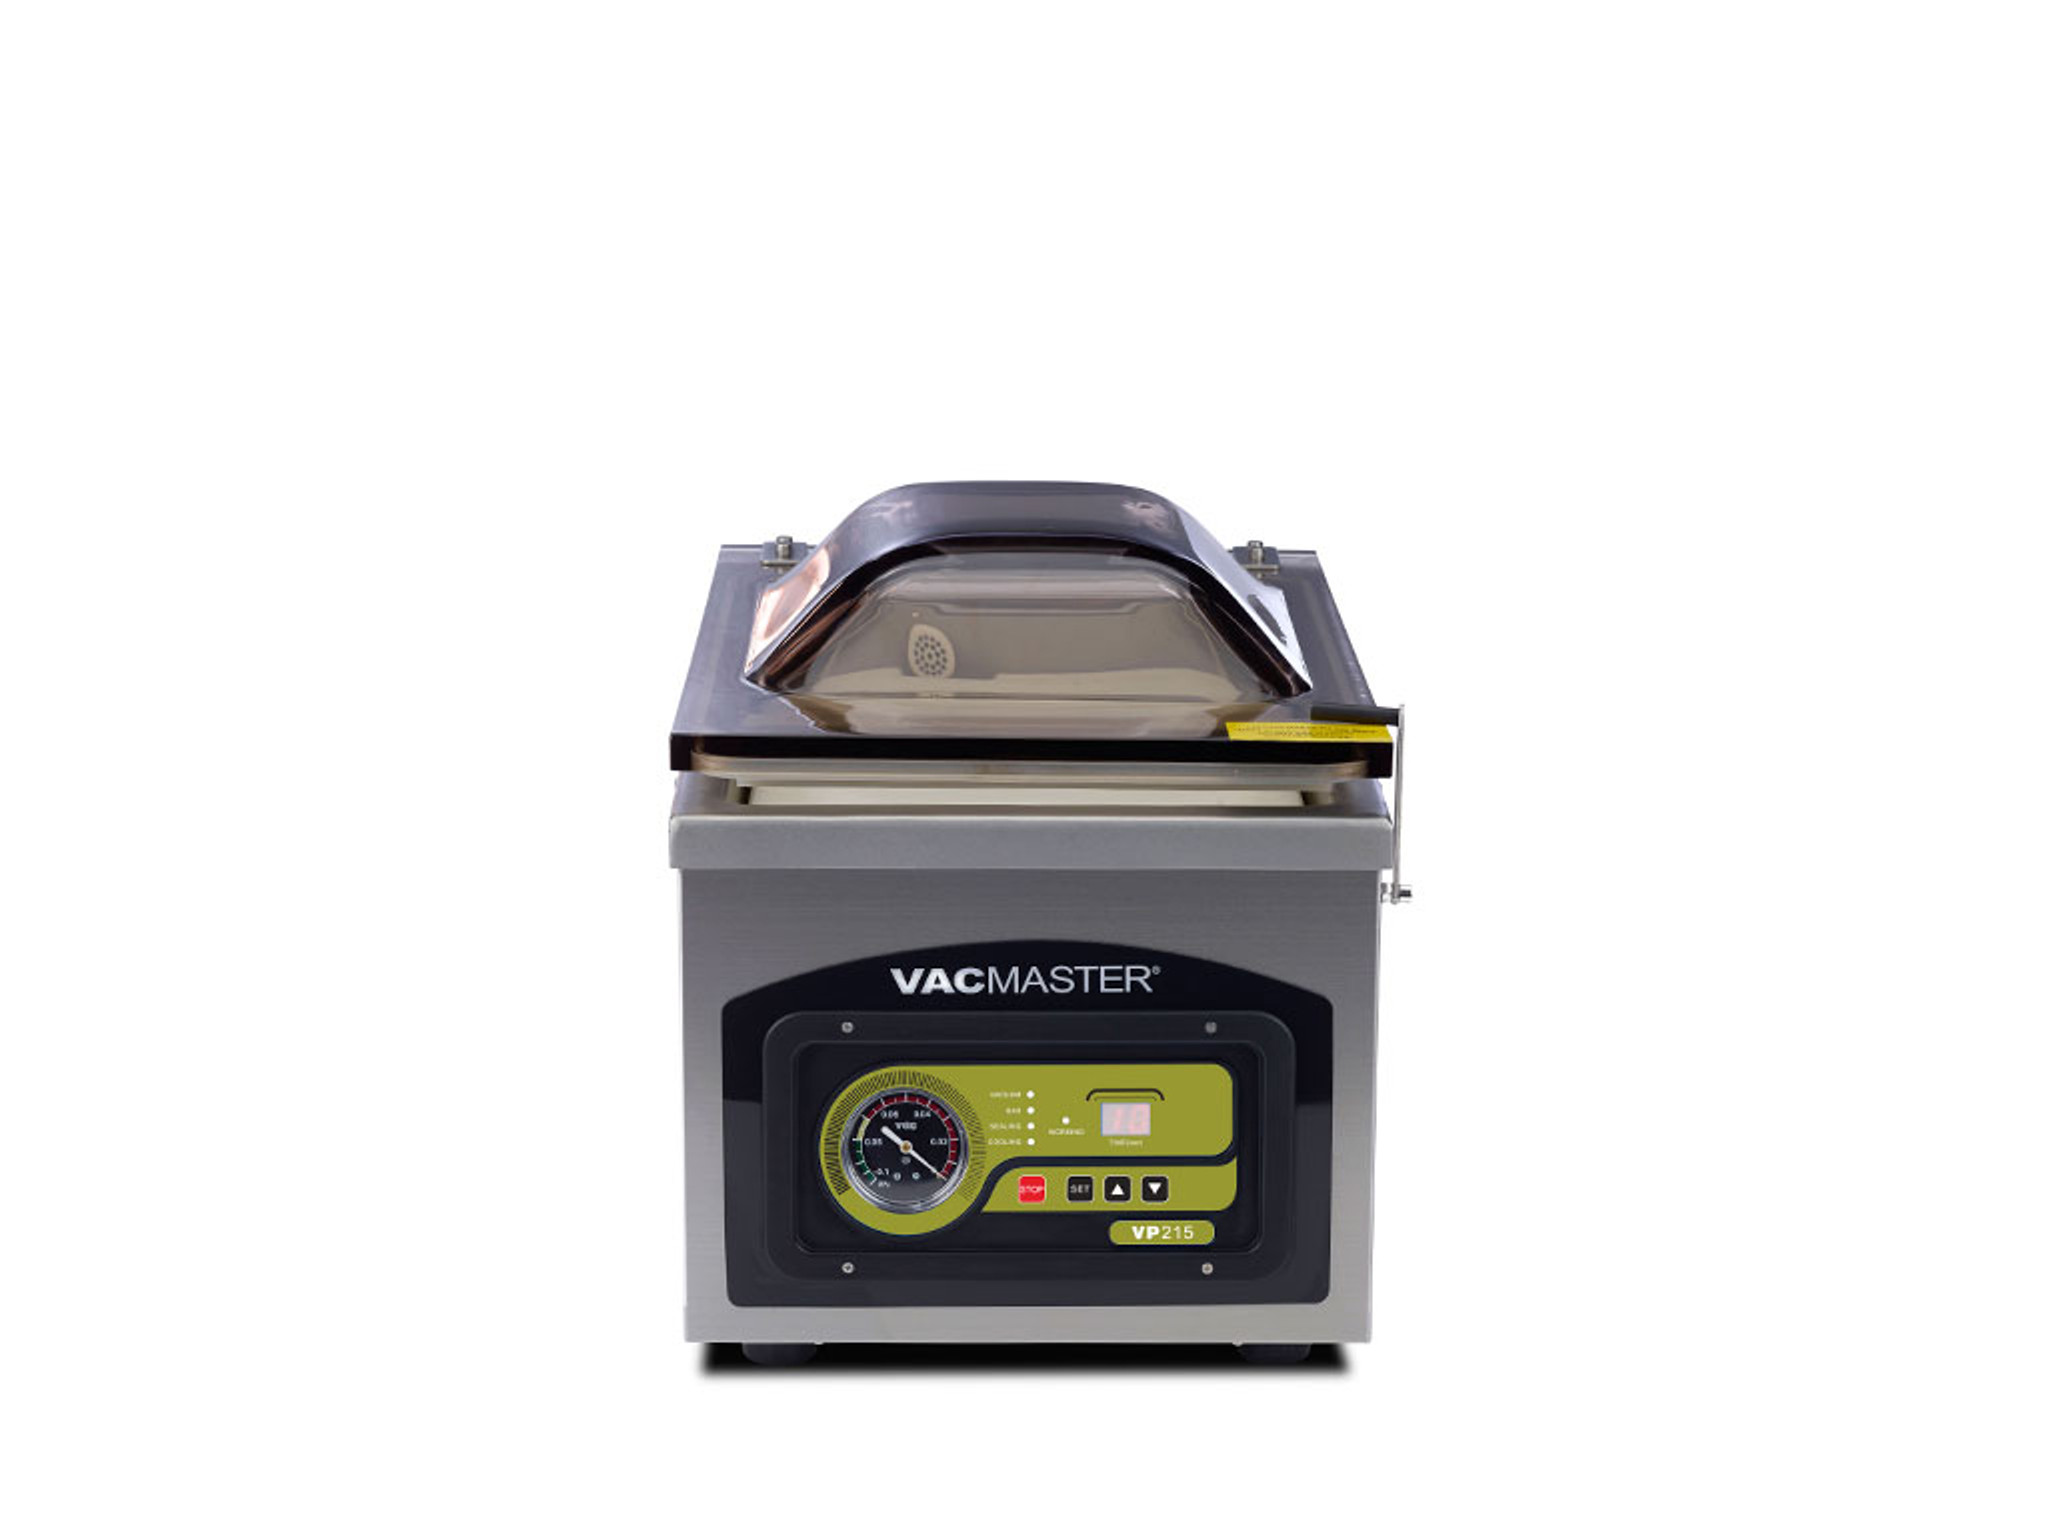 VacMaster VP215 Chamber Vacuum Sealer - WebstaurantStore